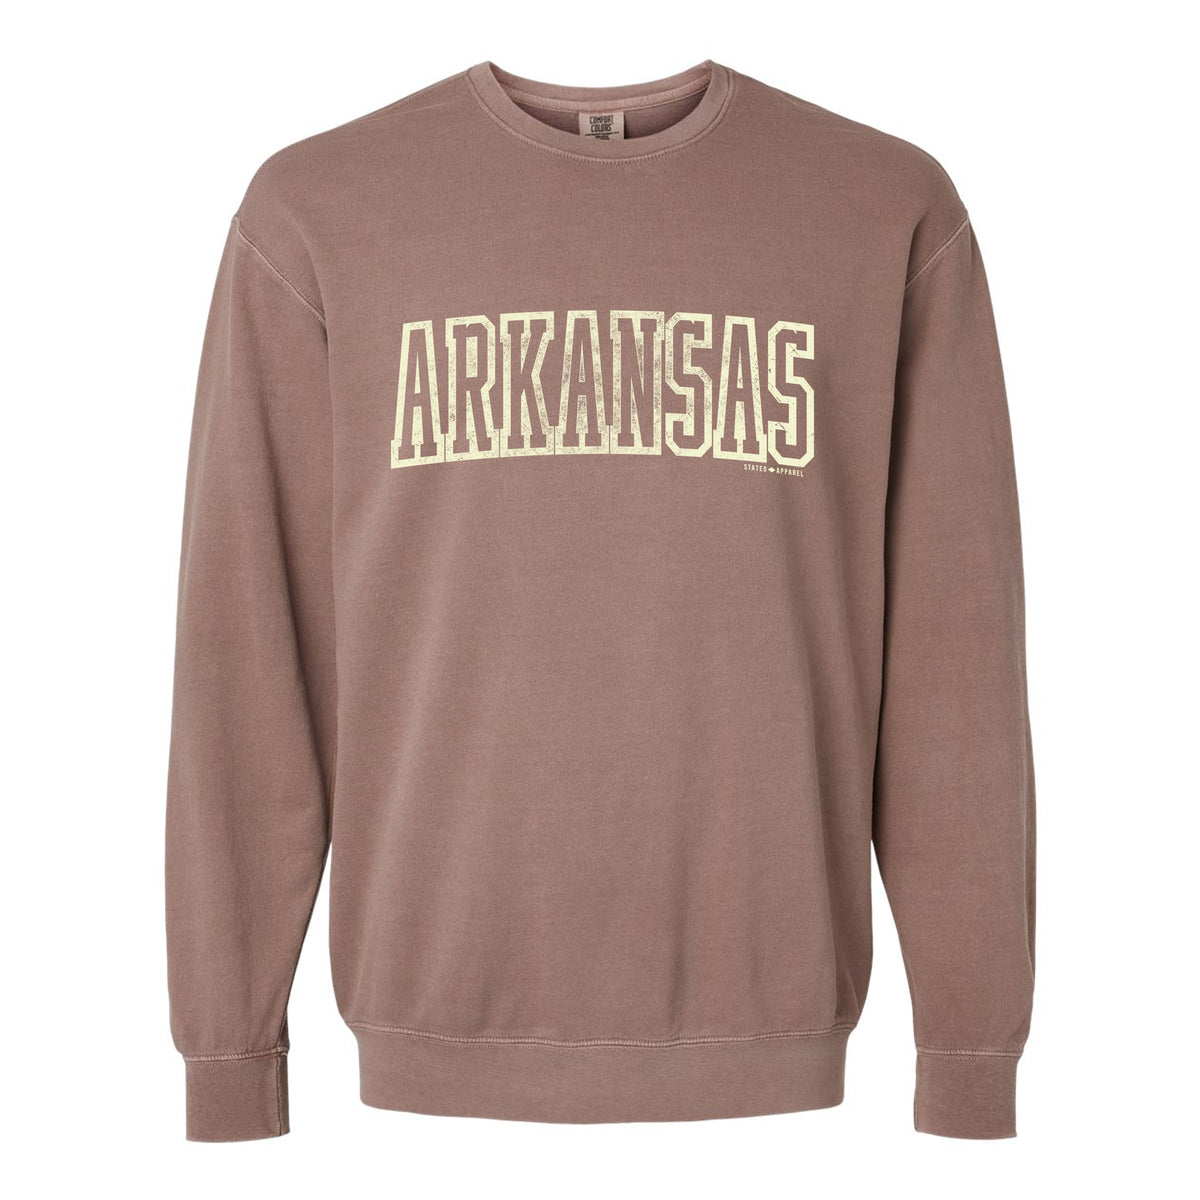 Arkansas Arch Outline Sweatshirt